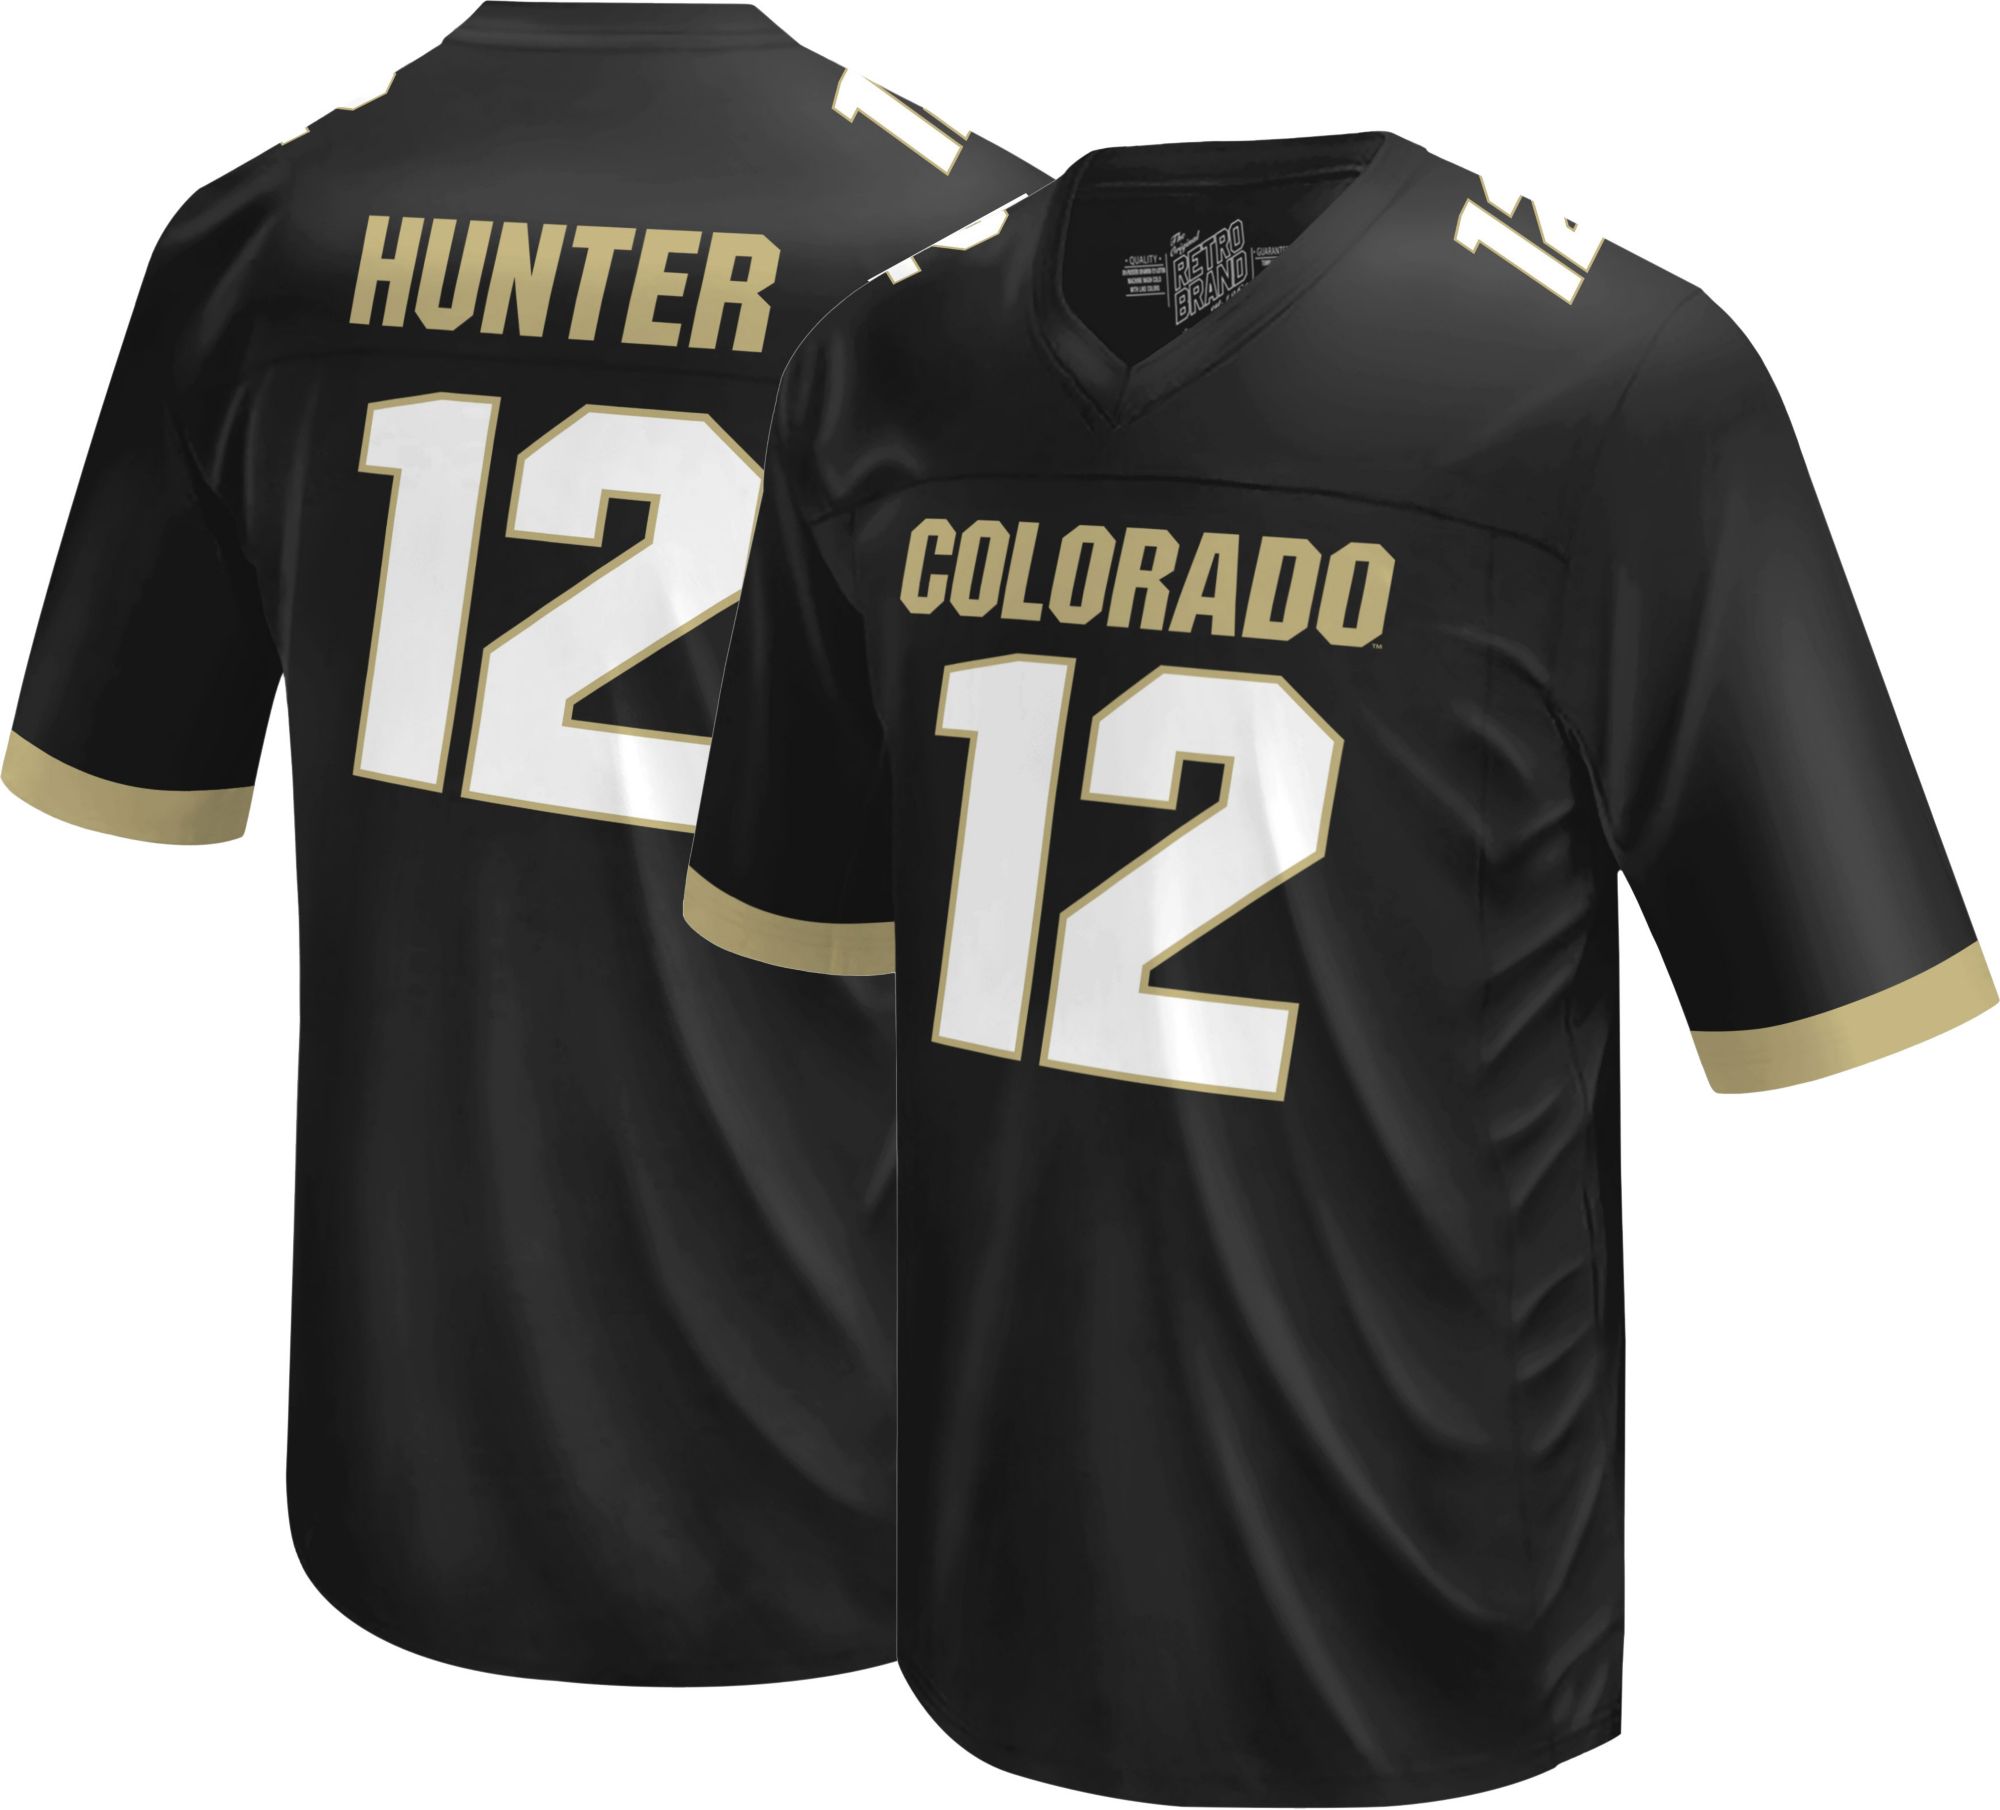 Retro Brand Men's Colorado Buffaloes Travis Hunter #12 Black Replica Football Jersey